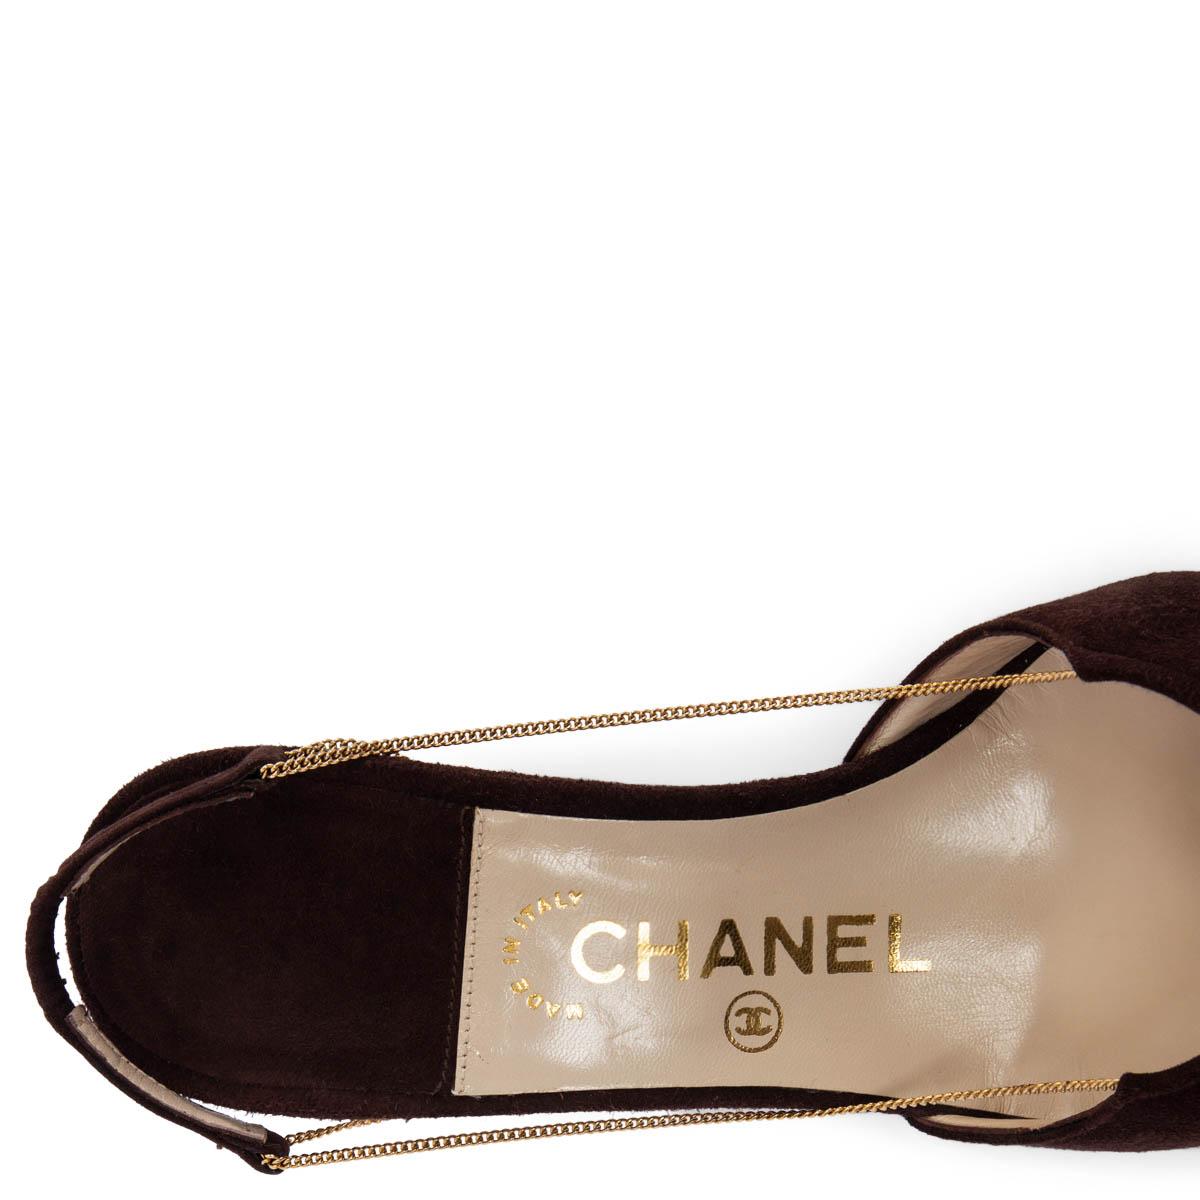 CHANEL daim marron CHAIN SLINGBACK CAMELLIA Chaussures 38.5 1